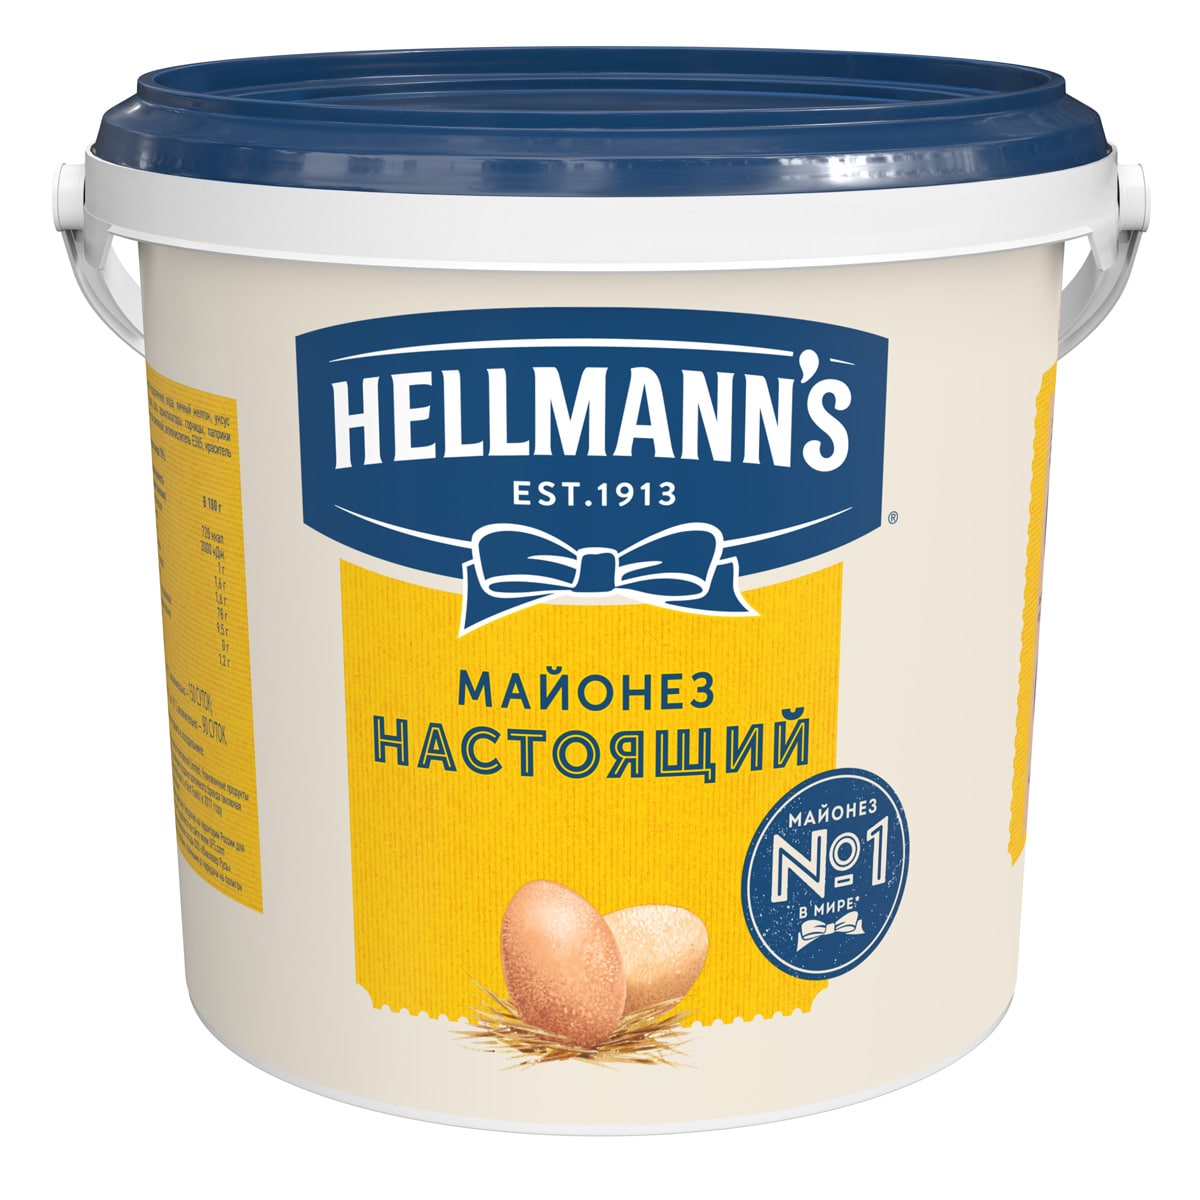 HELLMANN'S Майонез Настоящий (5л) - Hellmann’s Настоящий — для авторских блюд любой сложности.